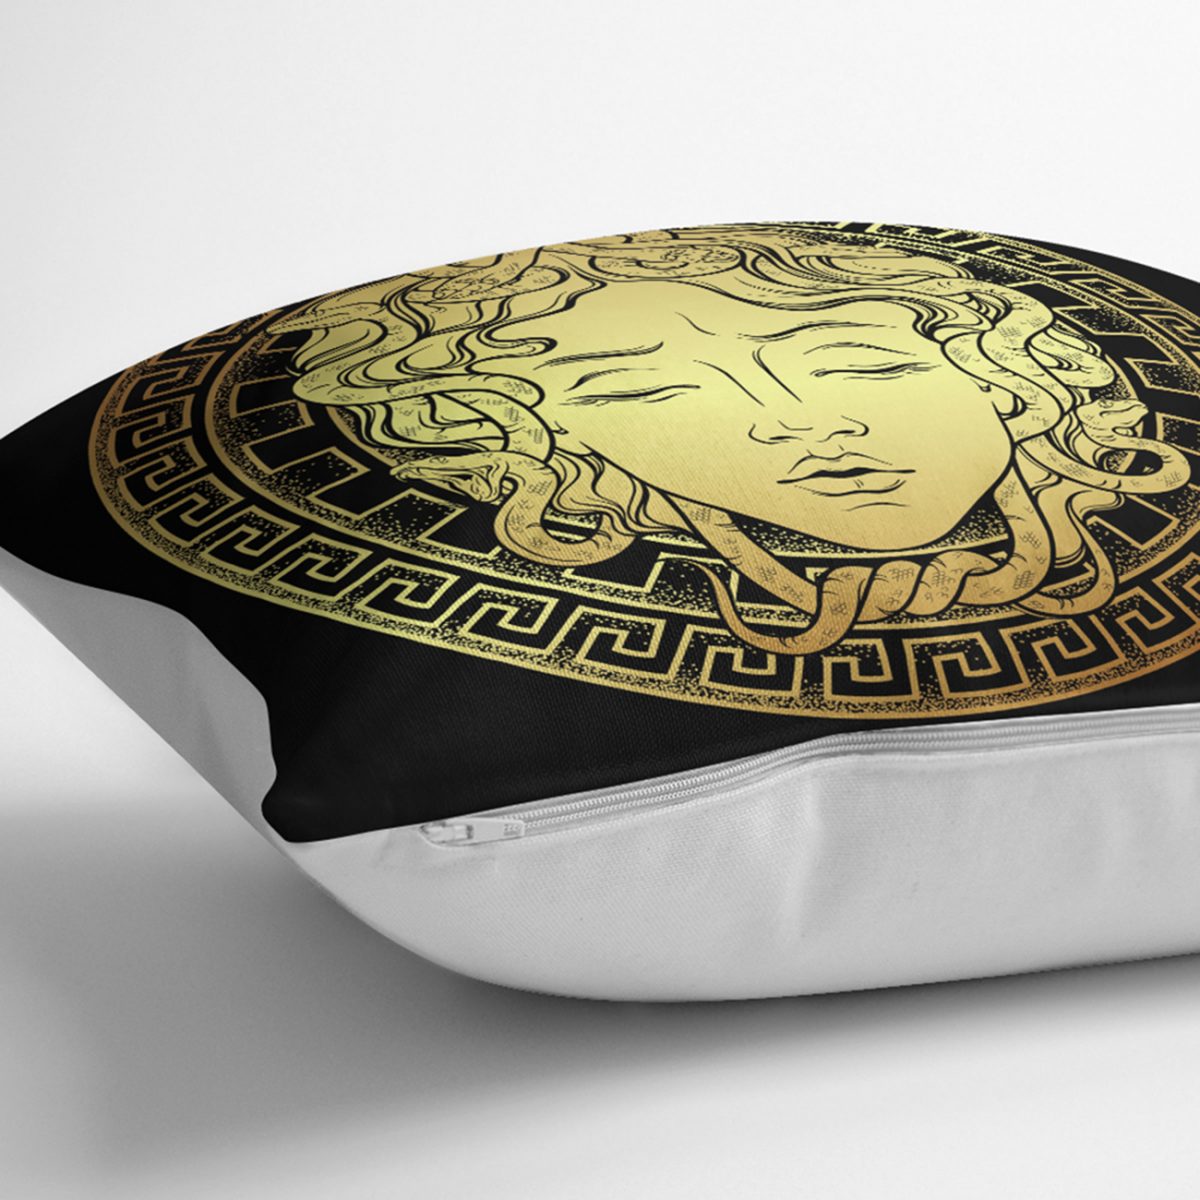 RealHomes Özel Tasarım Siyah Zeminde Gold Medusa Dekoratif Kırlent Kılıfı Realhomes